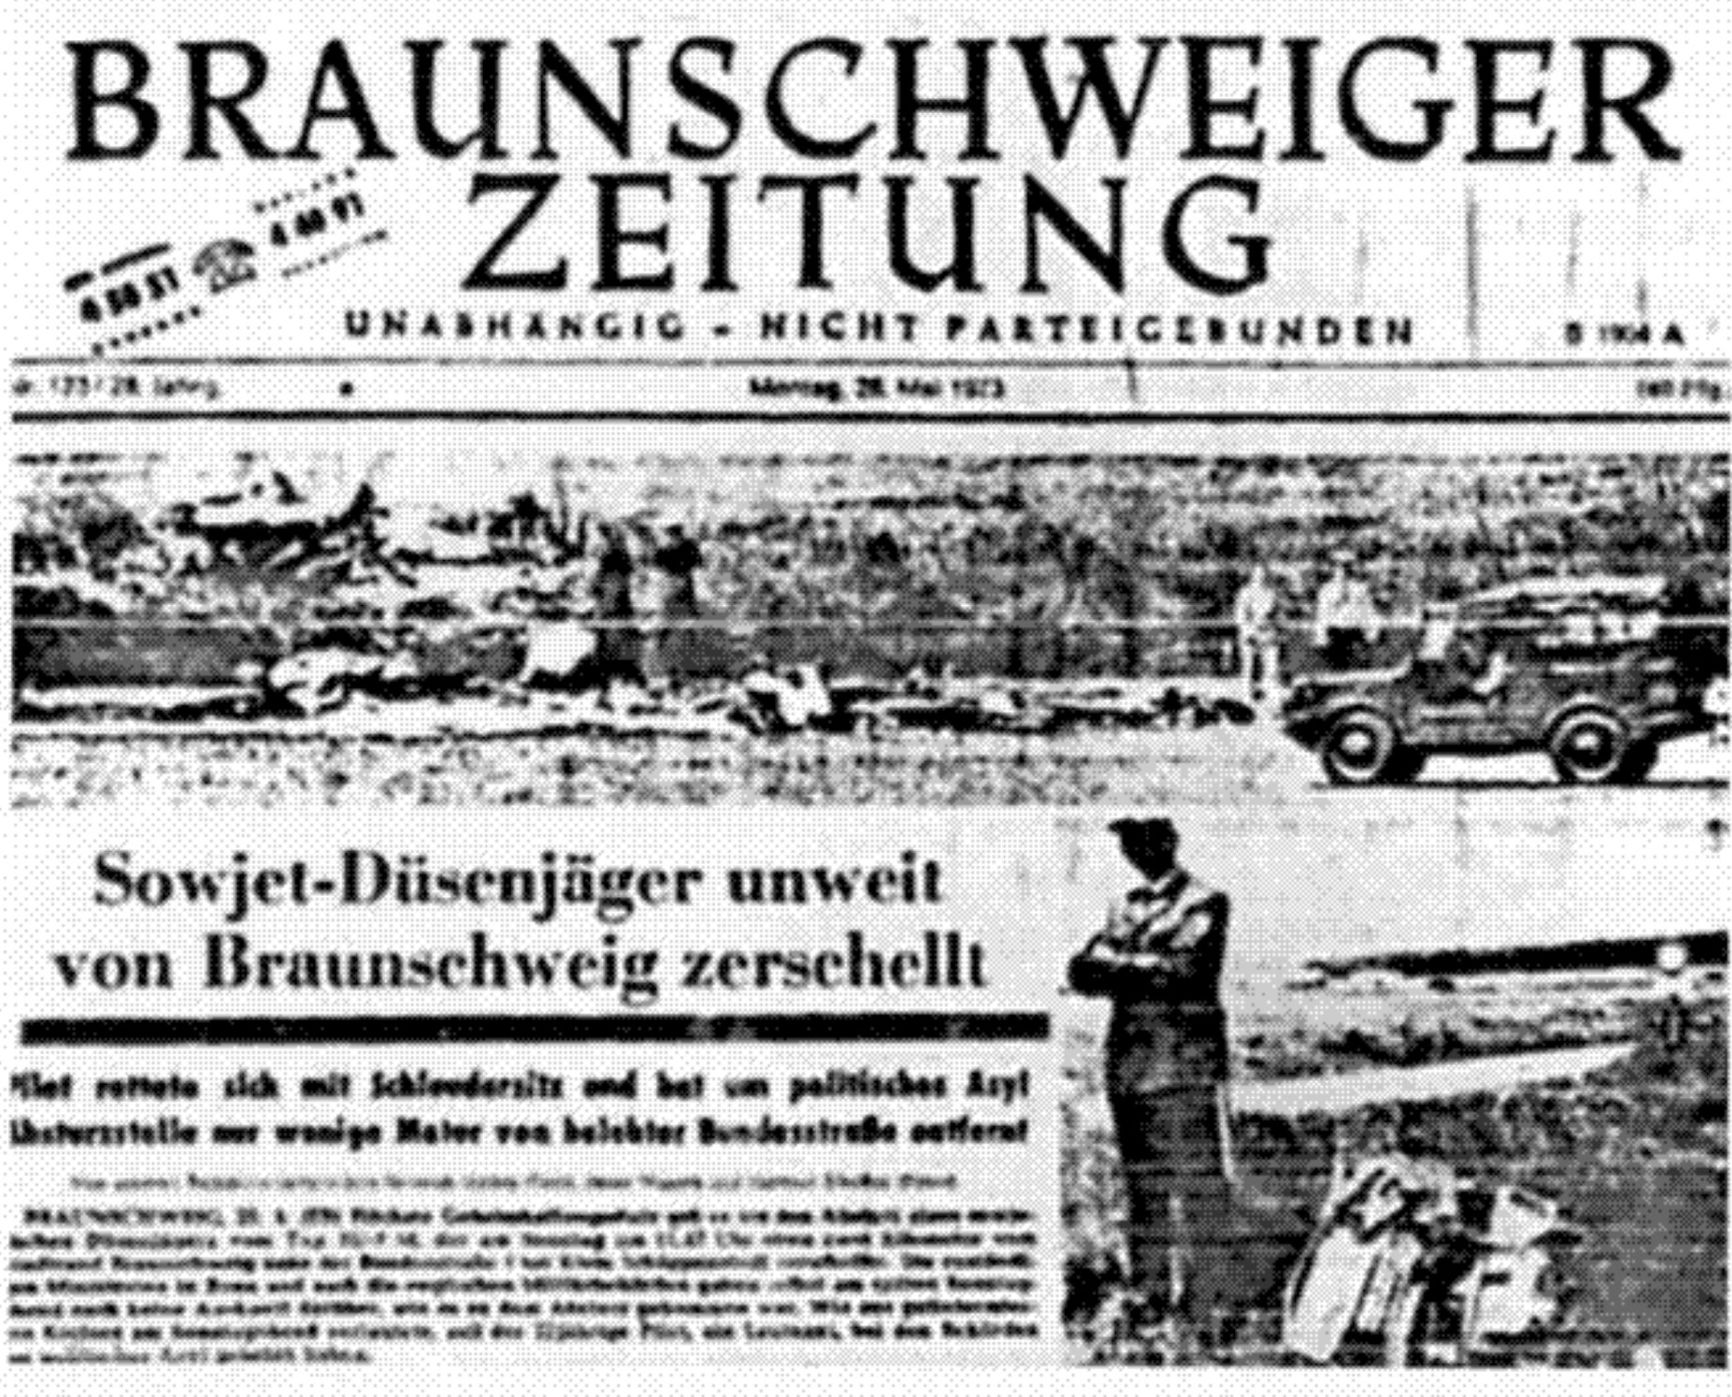 Report on Vronsky's escape in the Braunschweiger Zeitung newspaper